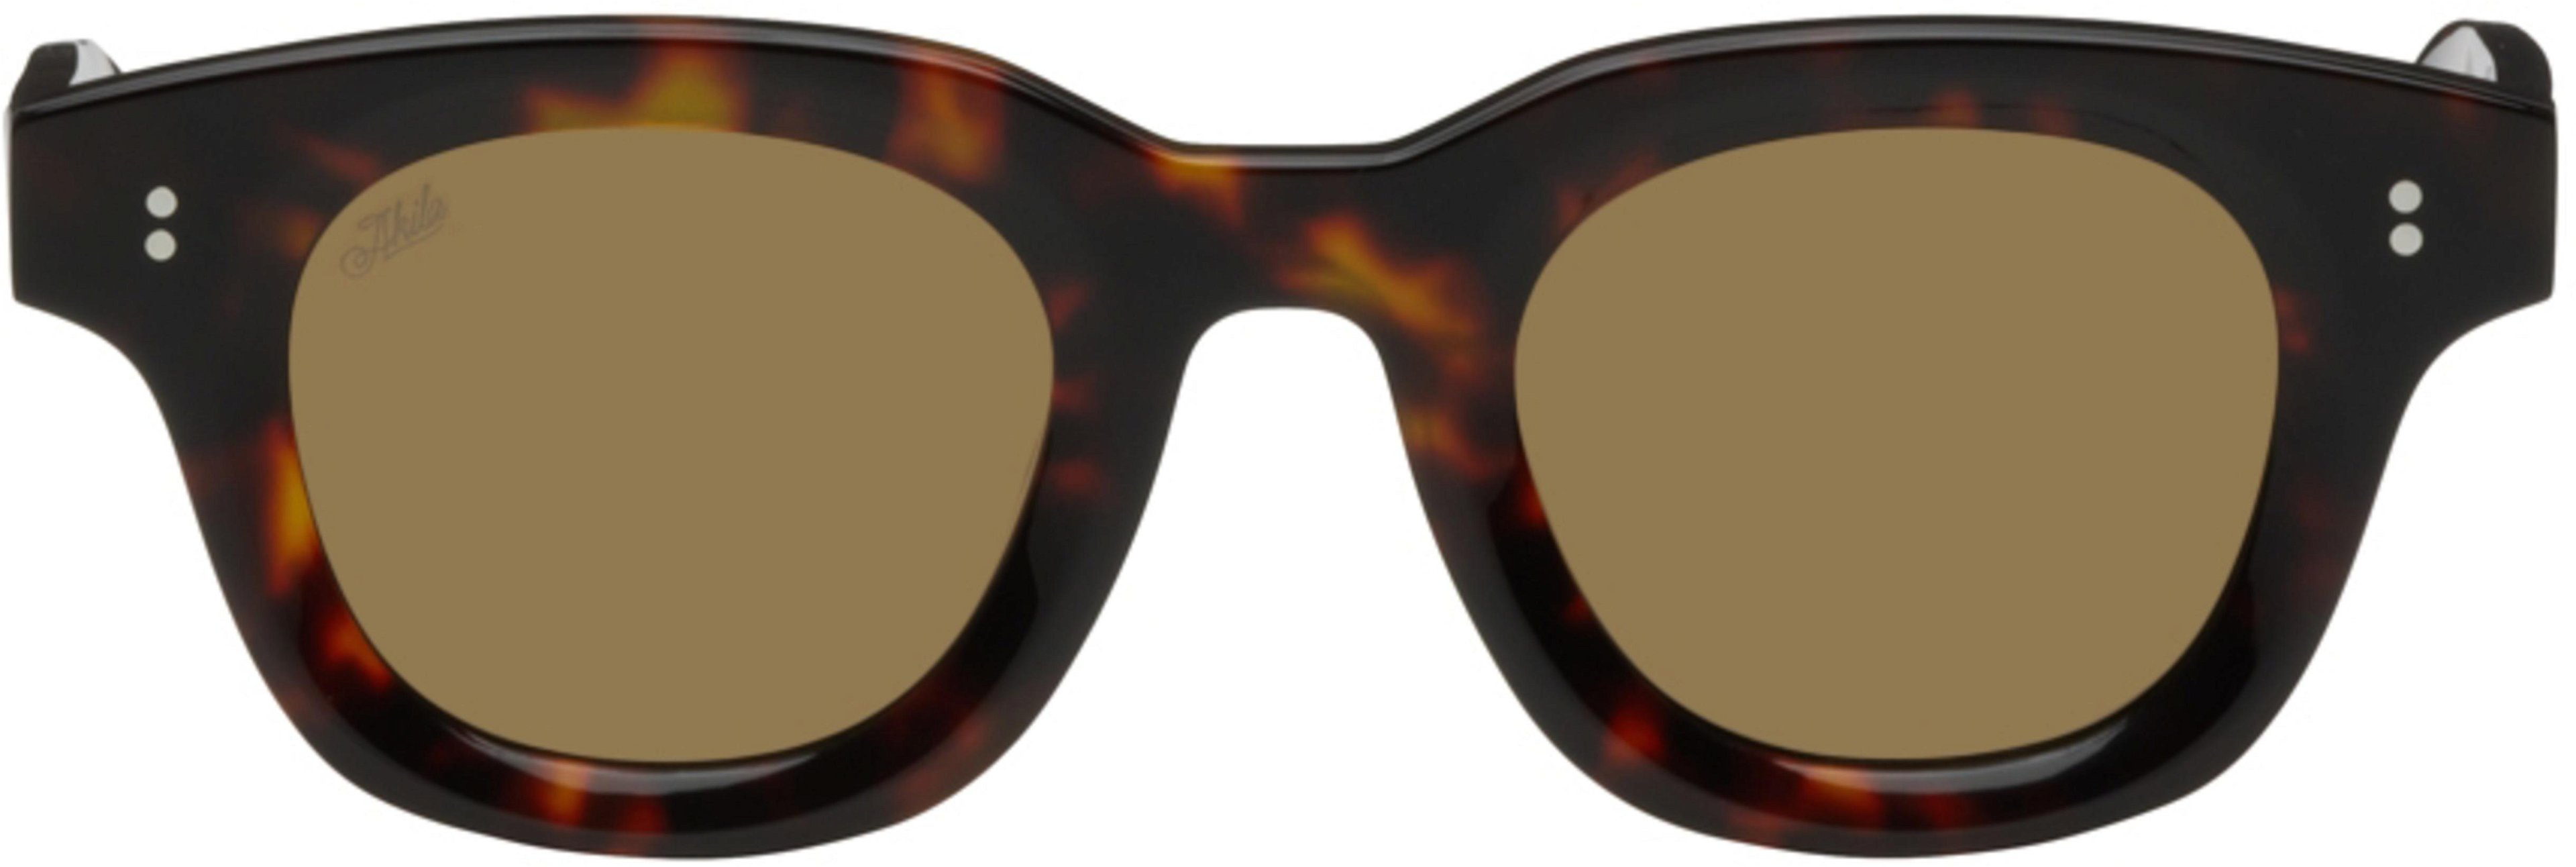 Tortoiseshell Apollo Sunglasses by AKILA